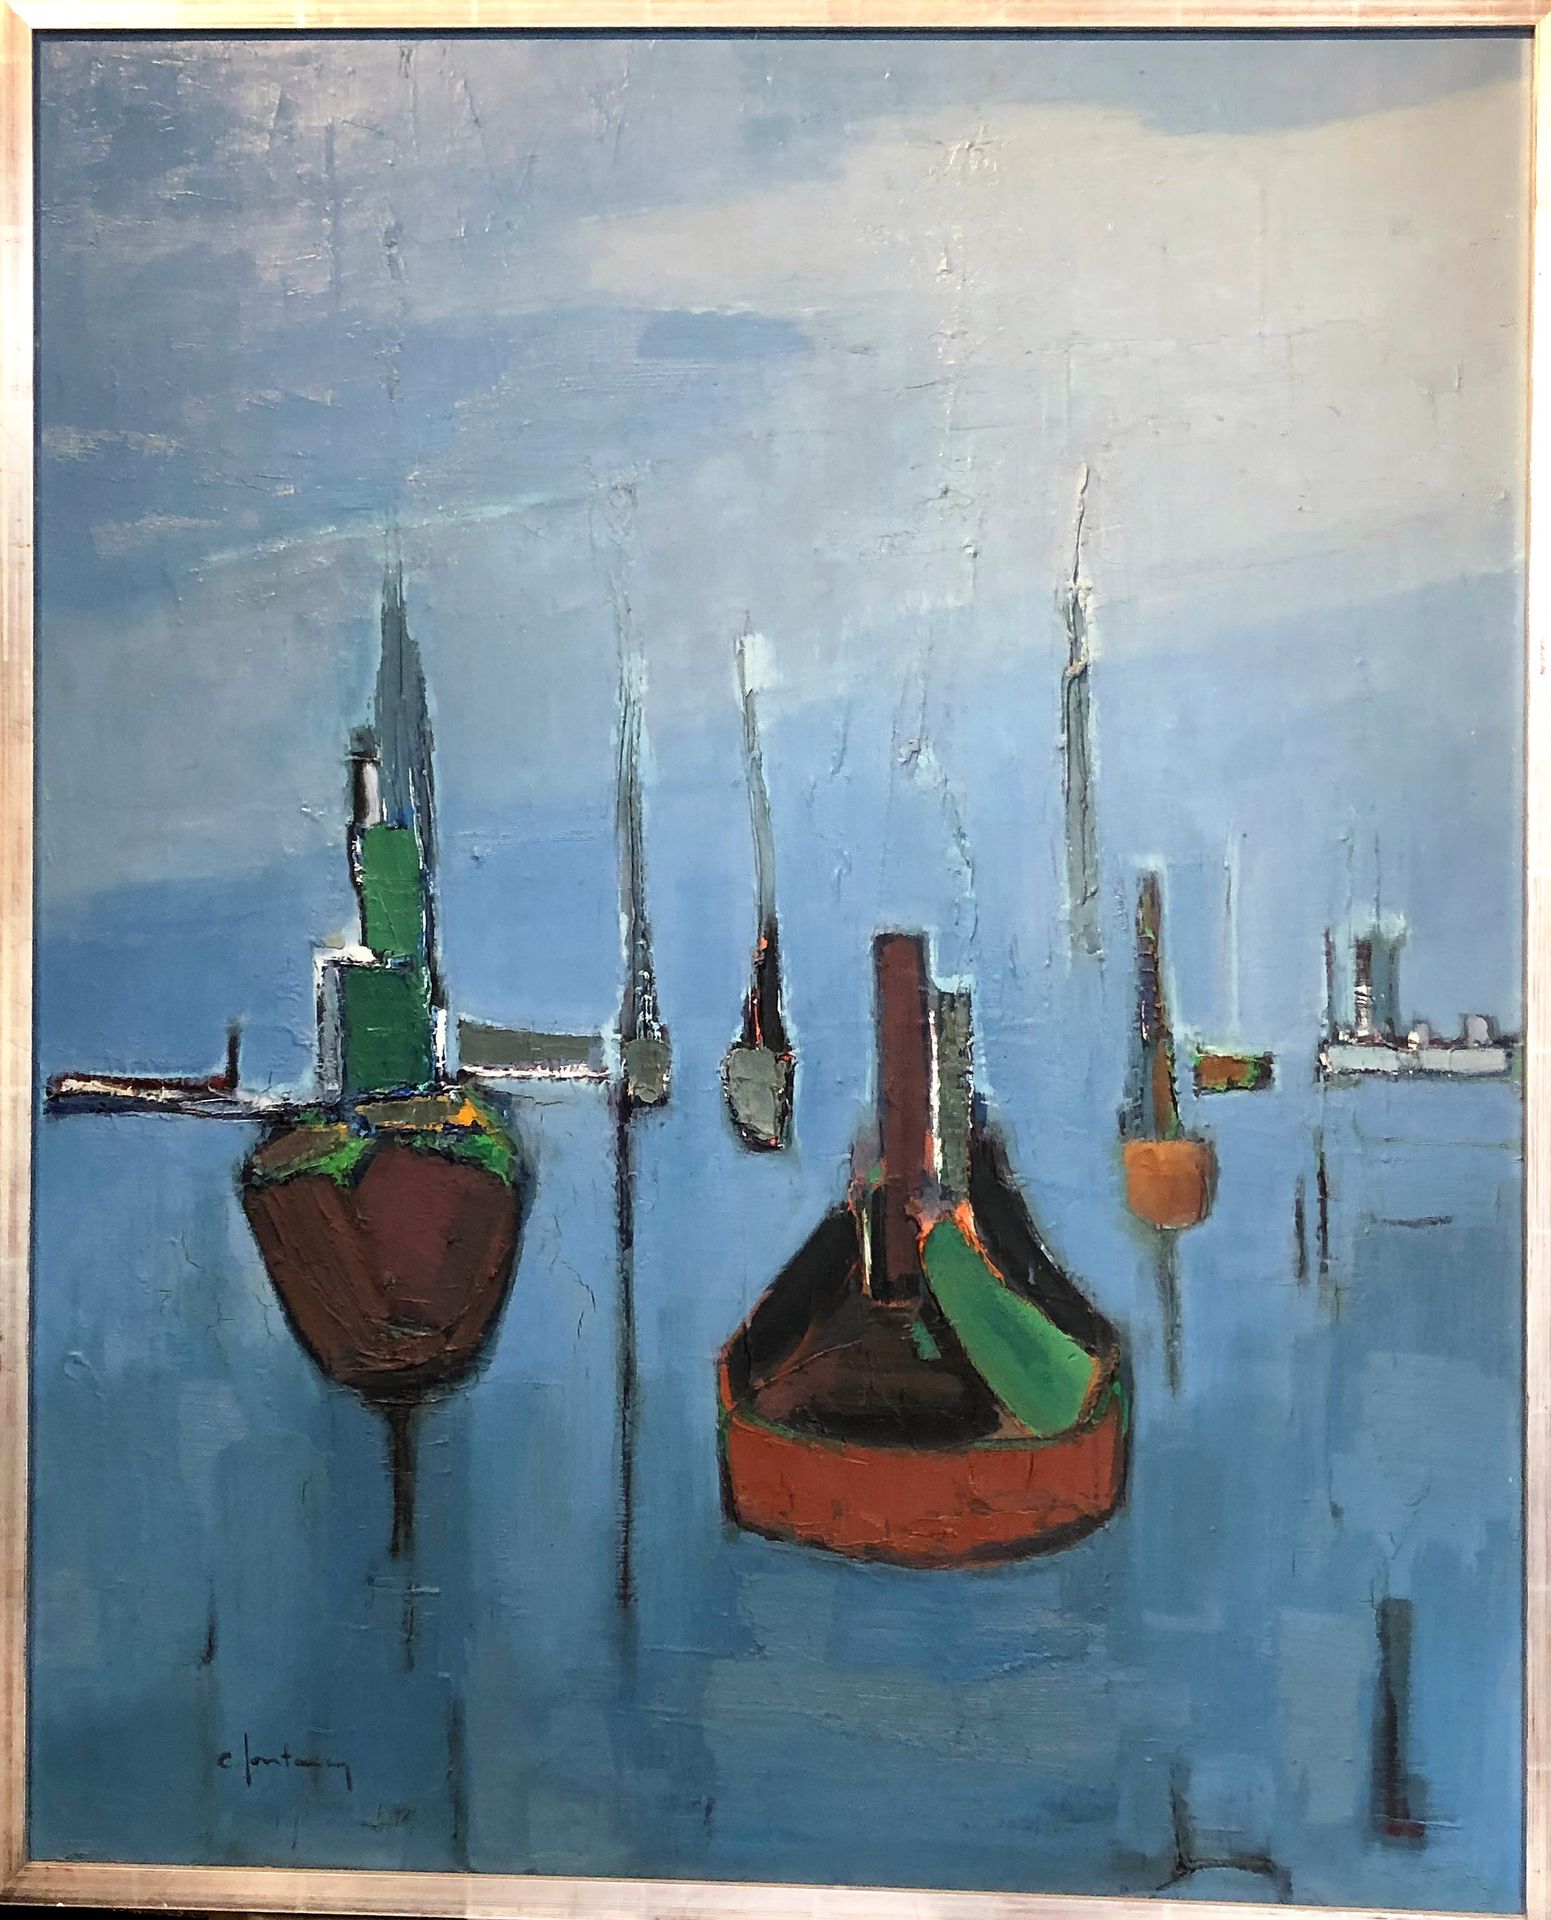 Null 克莱尔-方丹 (1930-20??)

非常大的海洋

布面油画，左下方有签名。

100 x 80厘米。

有框架。

法国私人收藏。